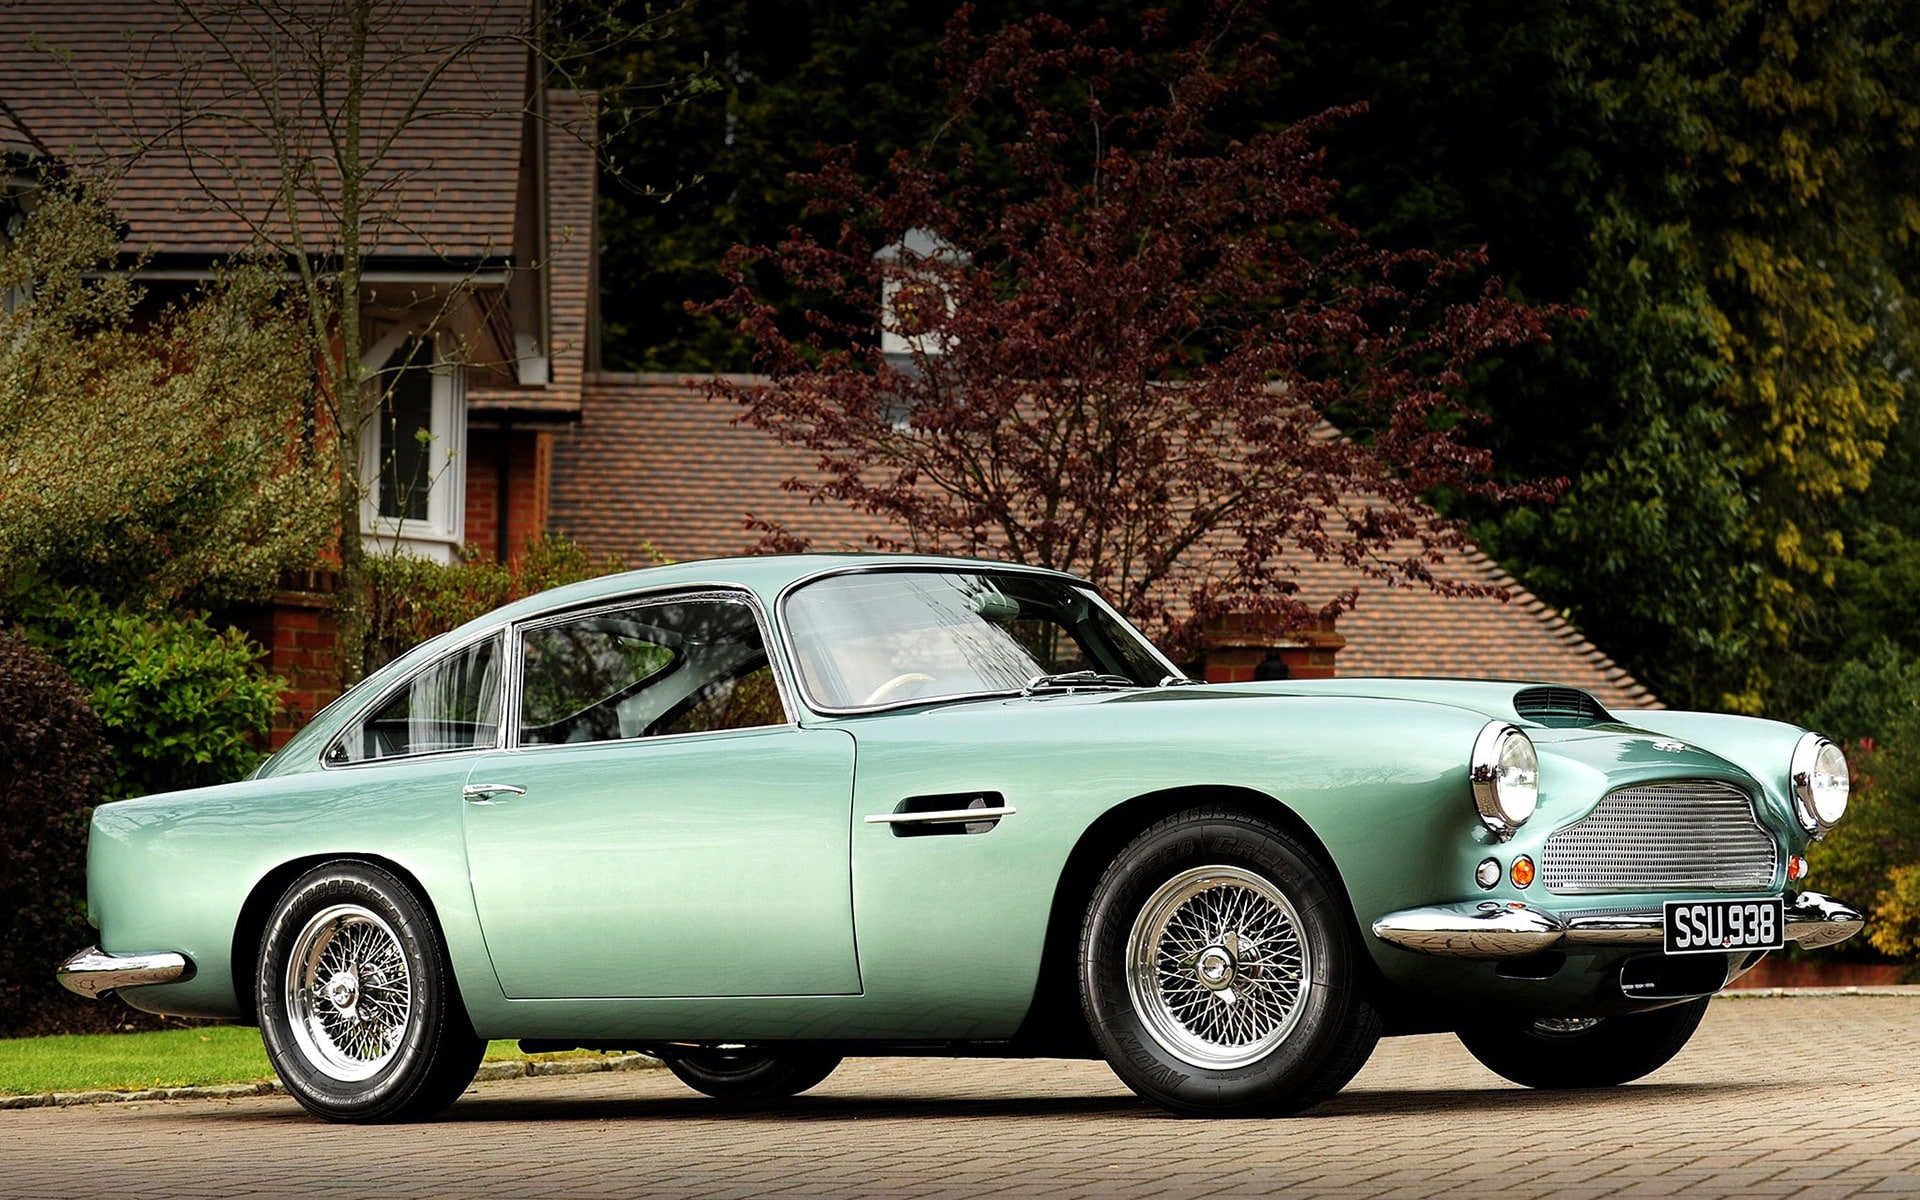 Aston Martin DB4 1958